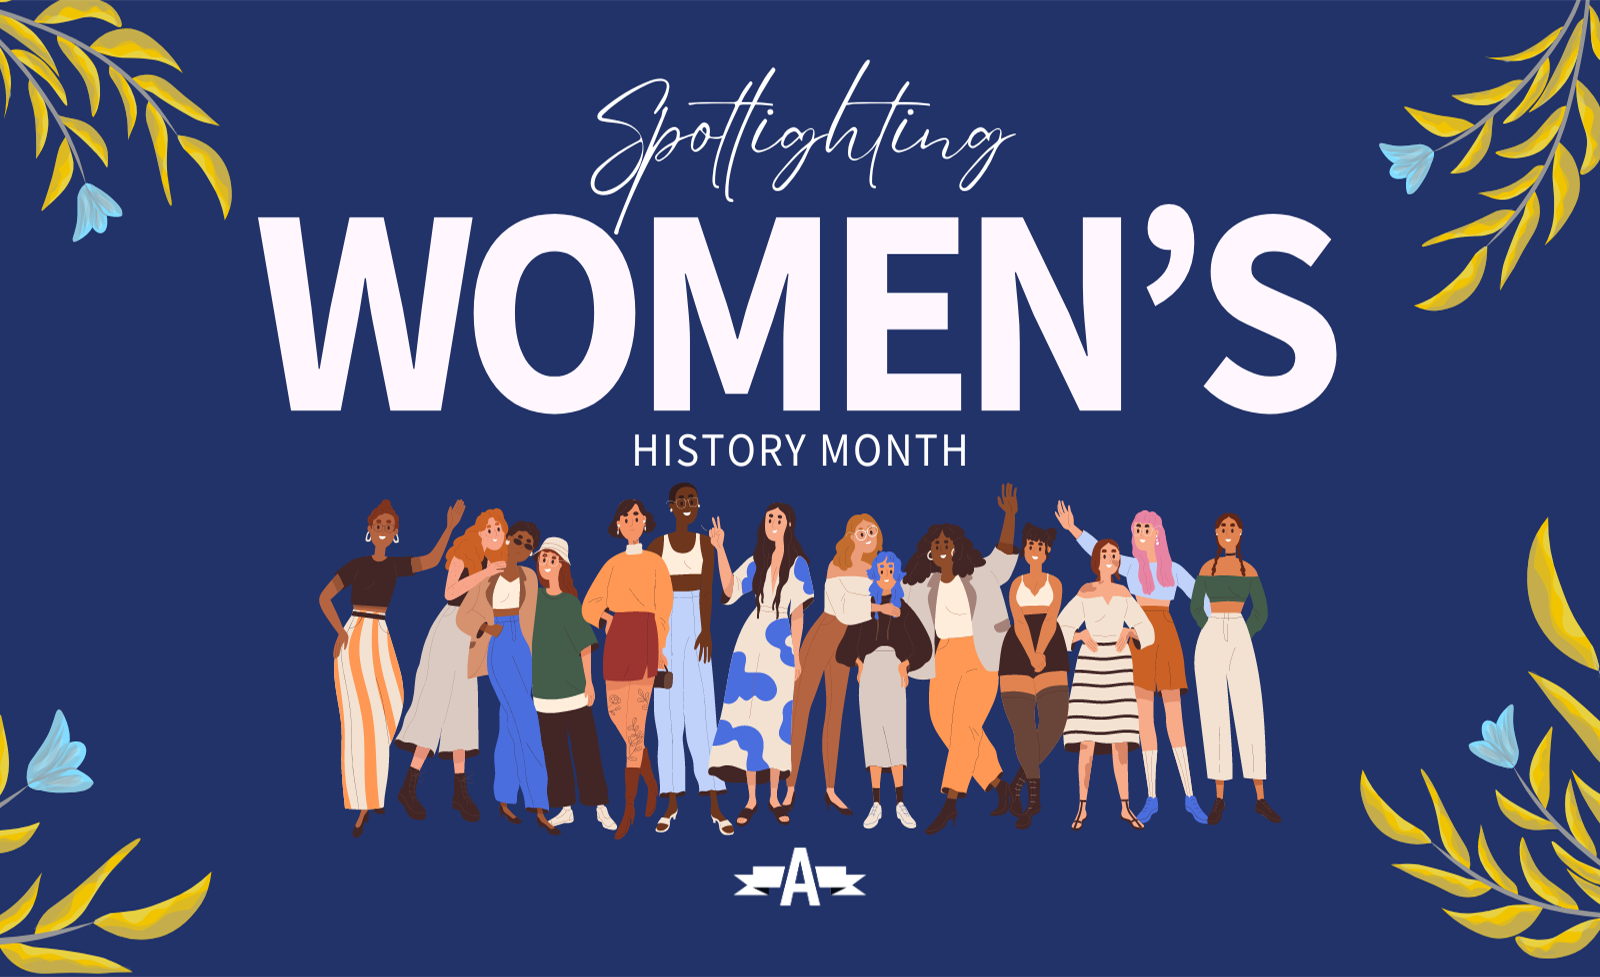 Spotlighting Women's History Month